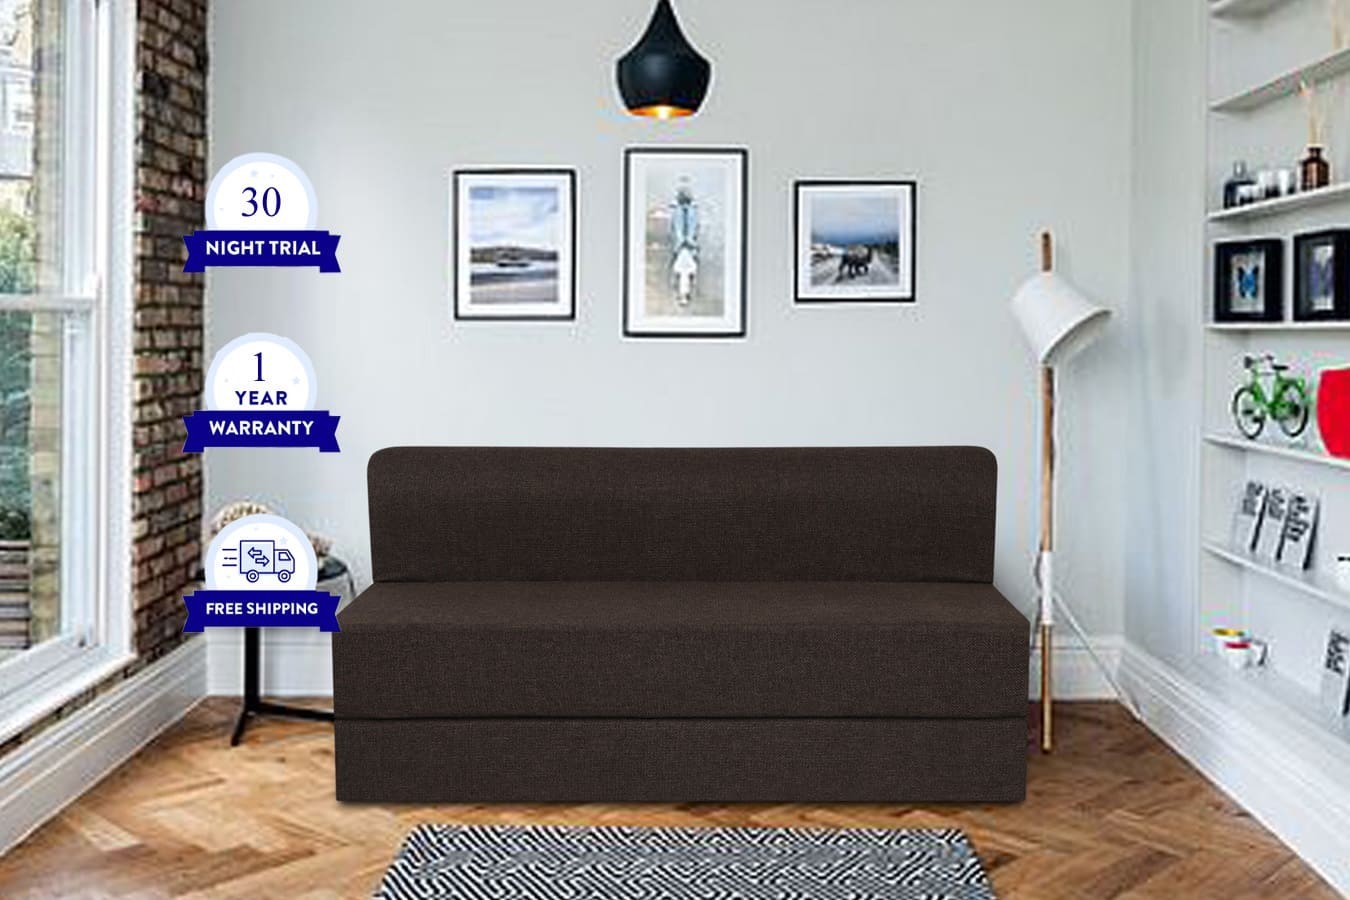 Buy Sofa Cum Bed Online - Folding Sofa Bed Price